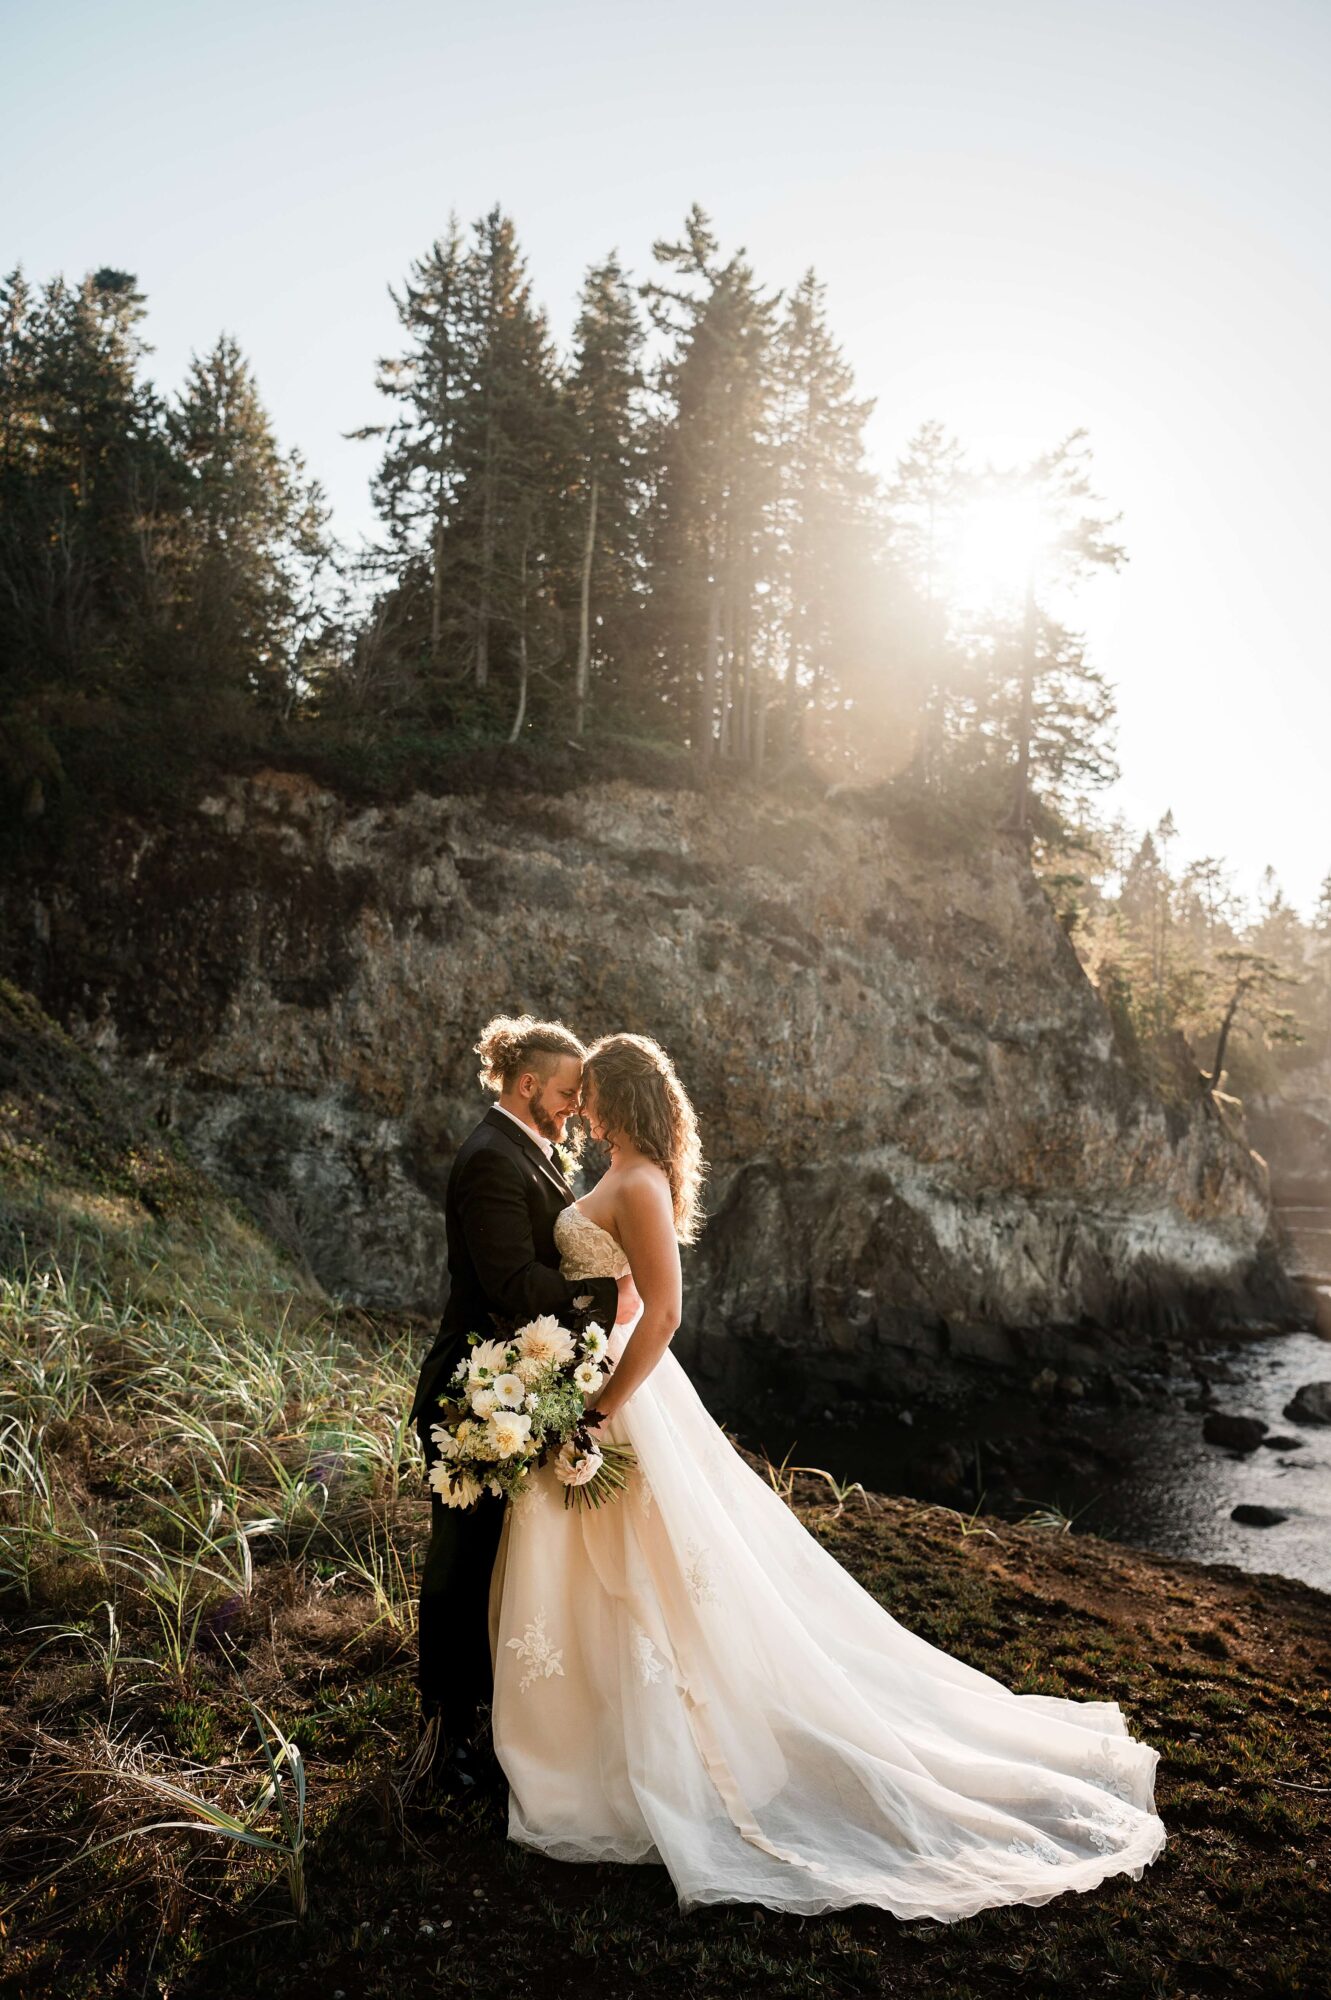 Coastal Washington State elopement